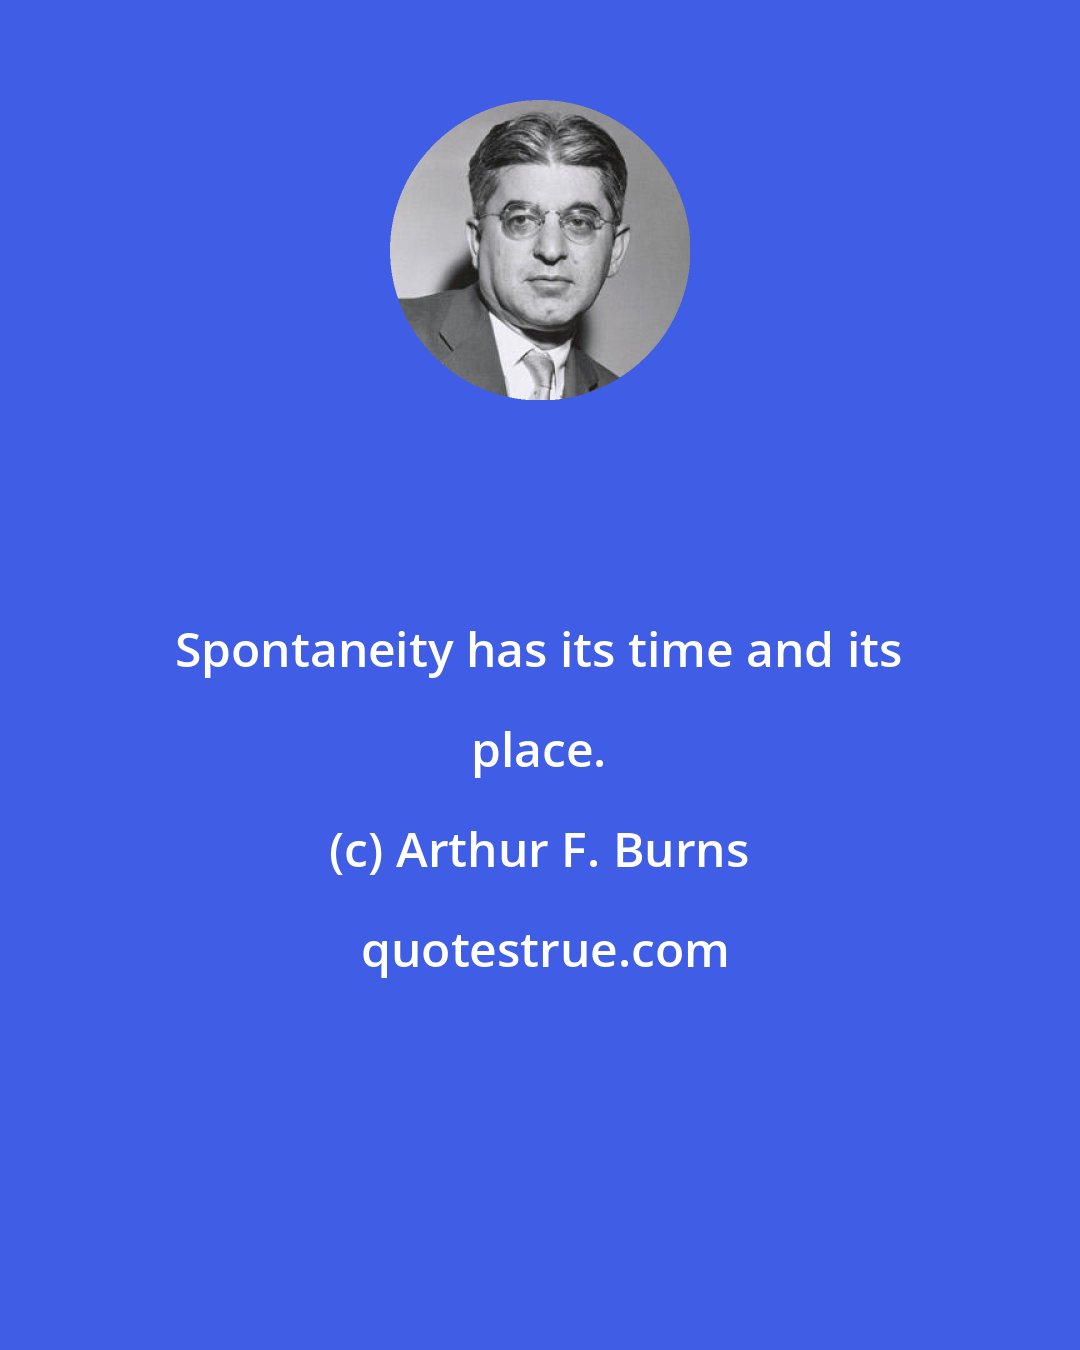 Arthur F. Burns: Spontaneity has its time and its place.